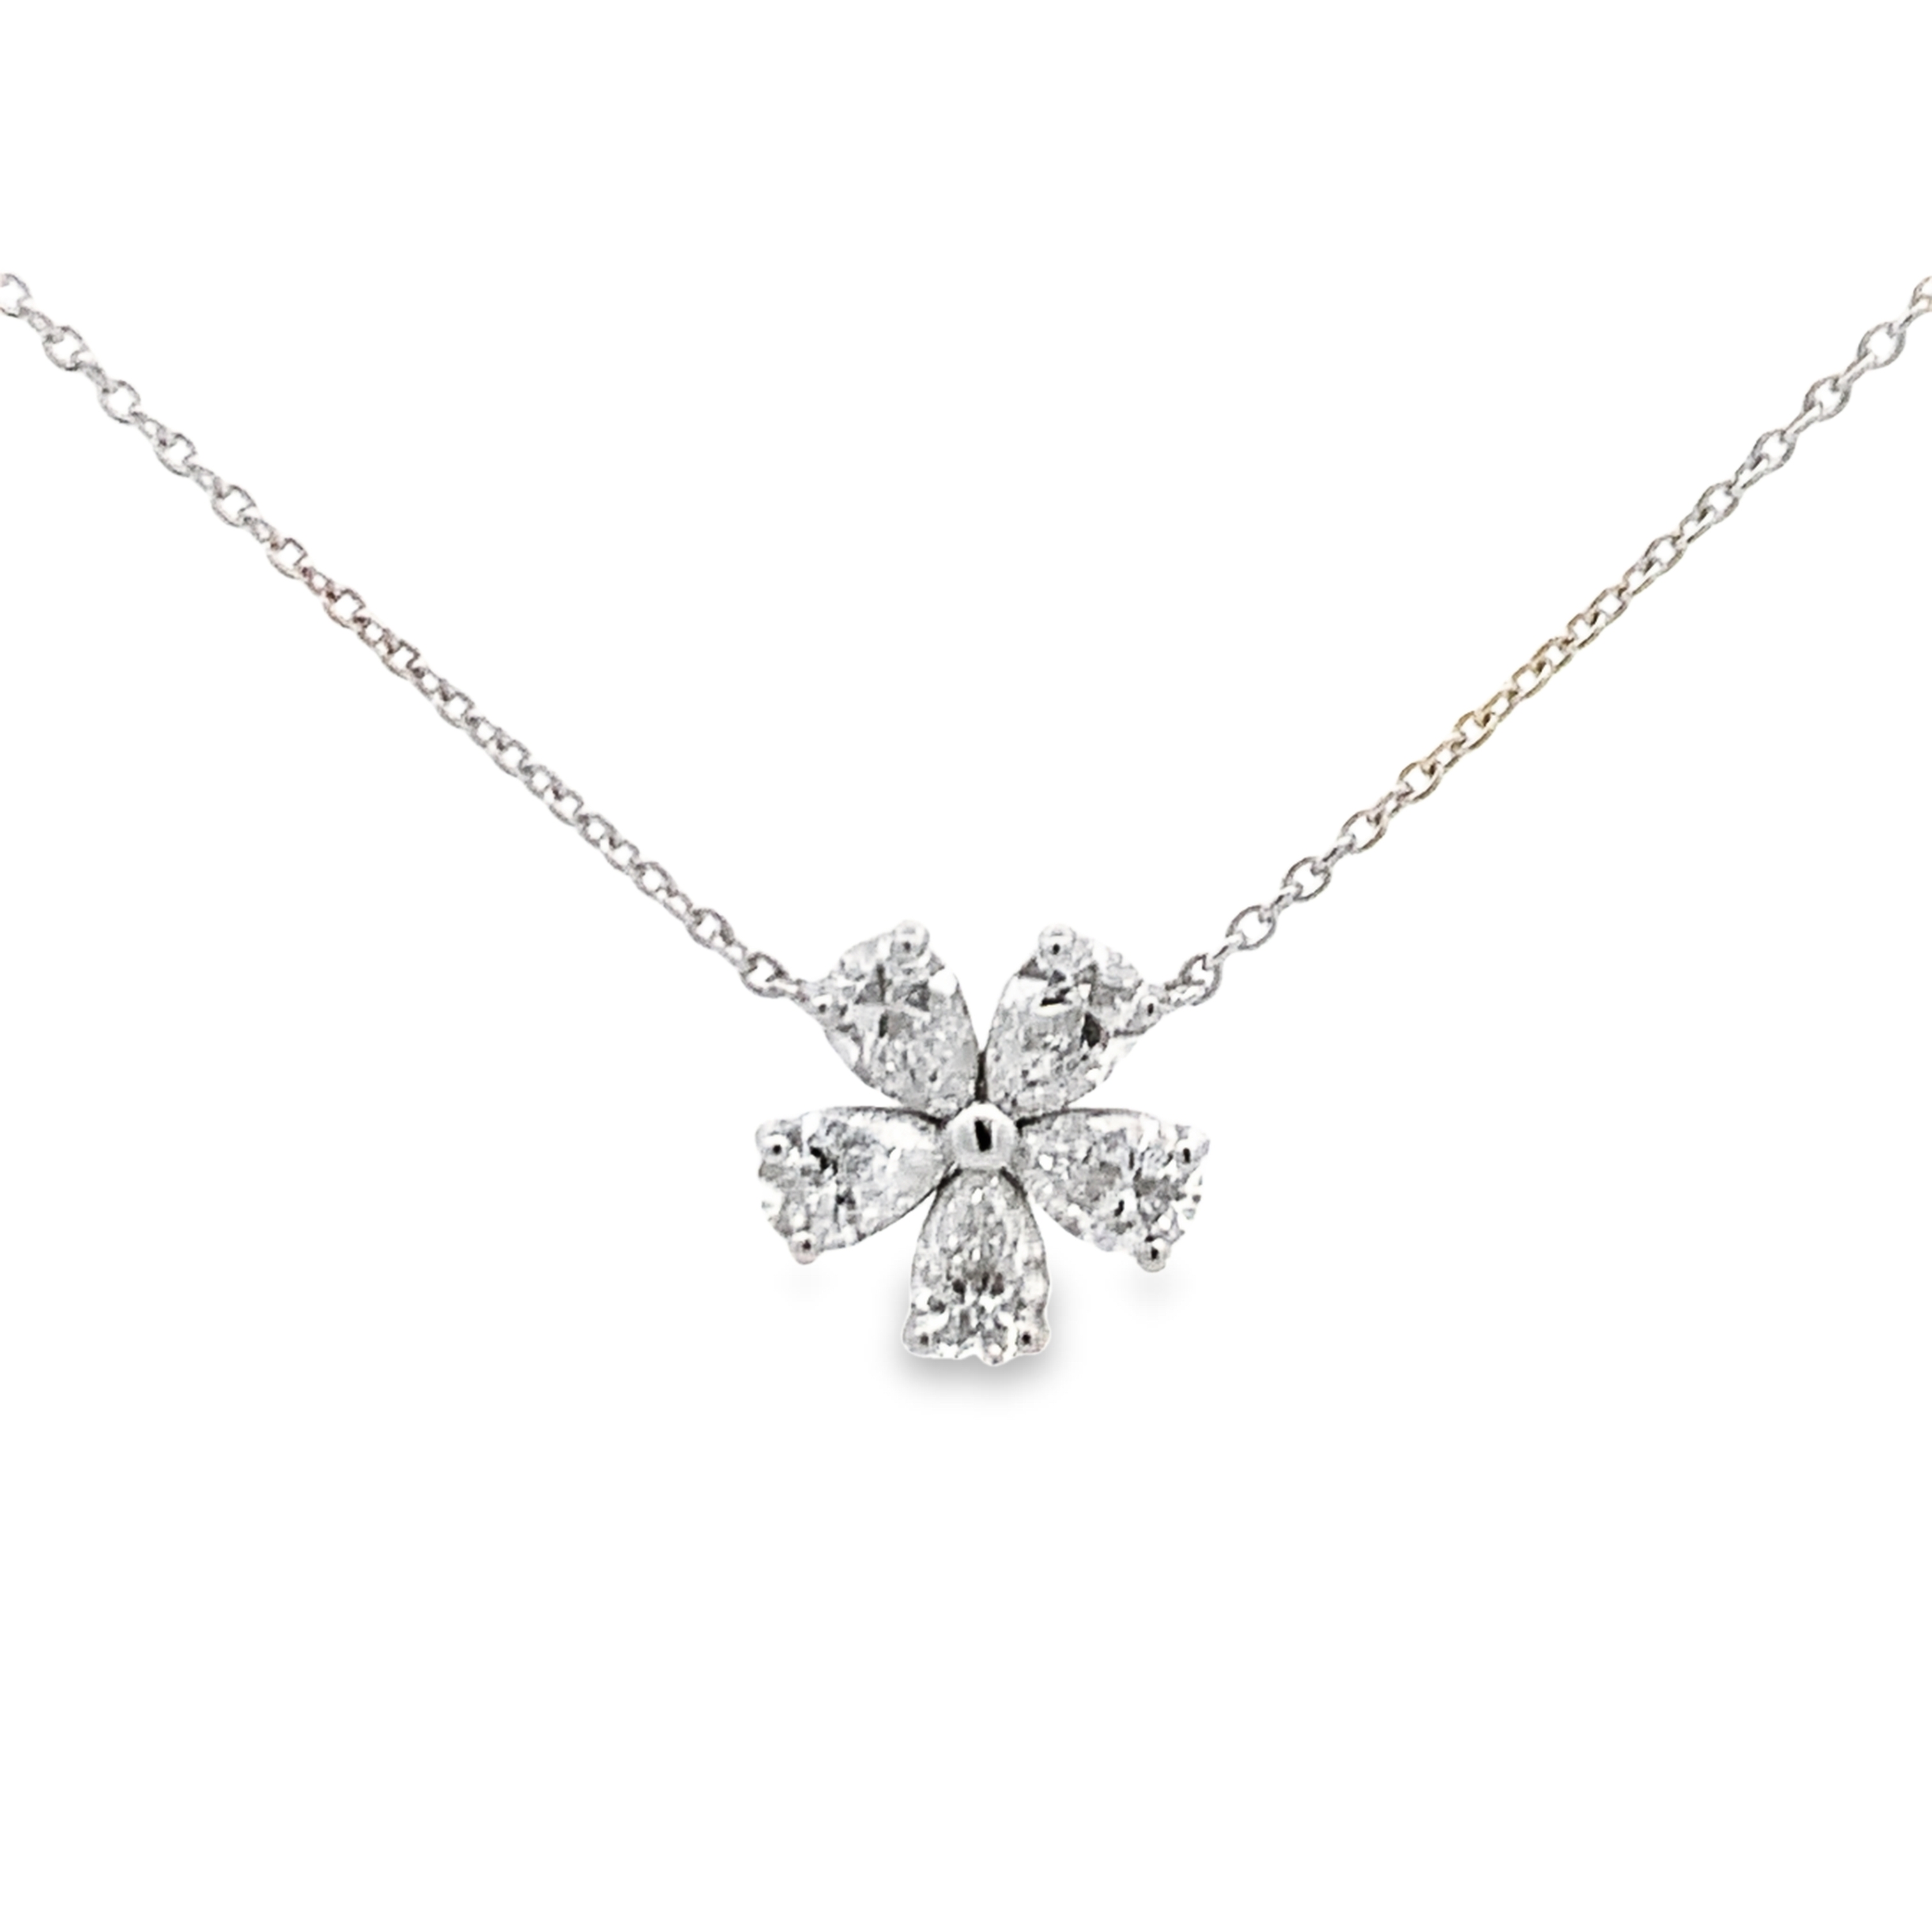 Norman Silverman 18K White Gold Diamond Flower Necklace